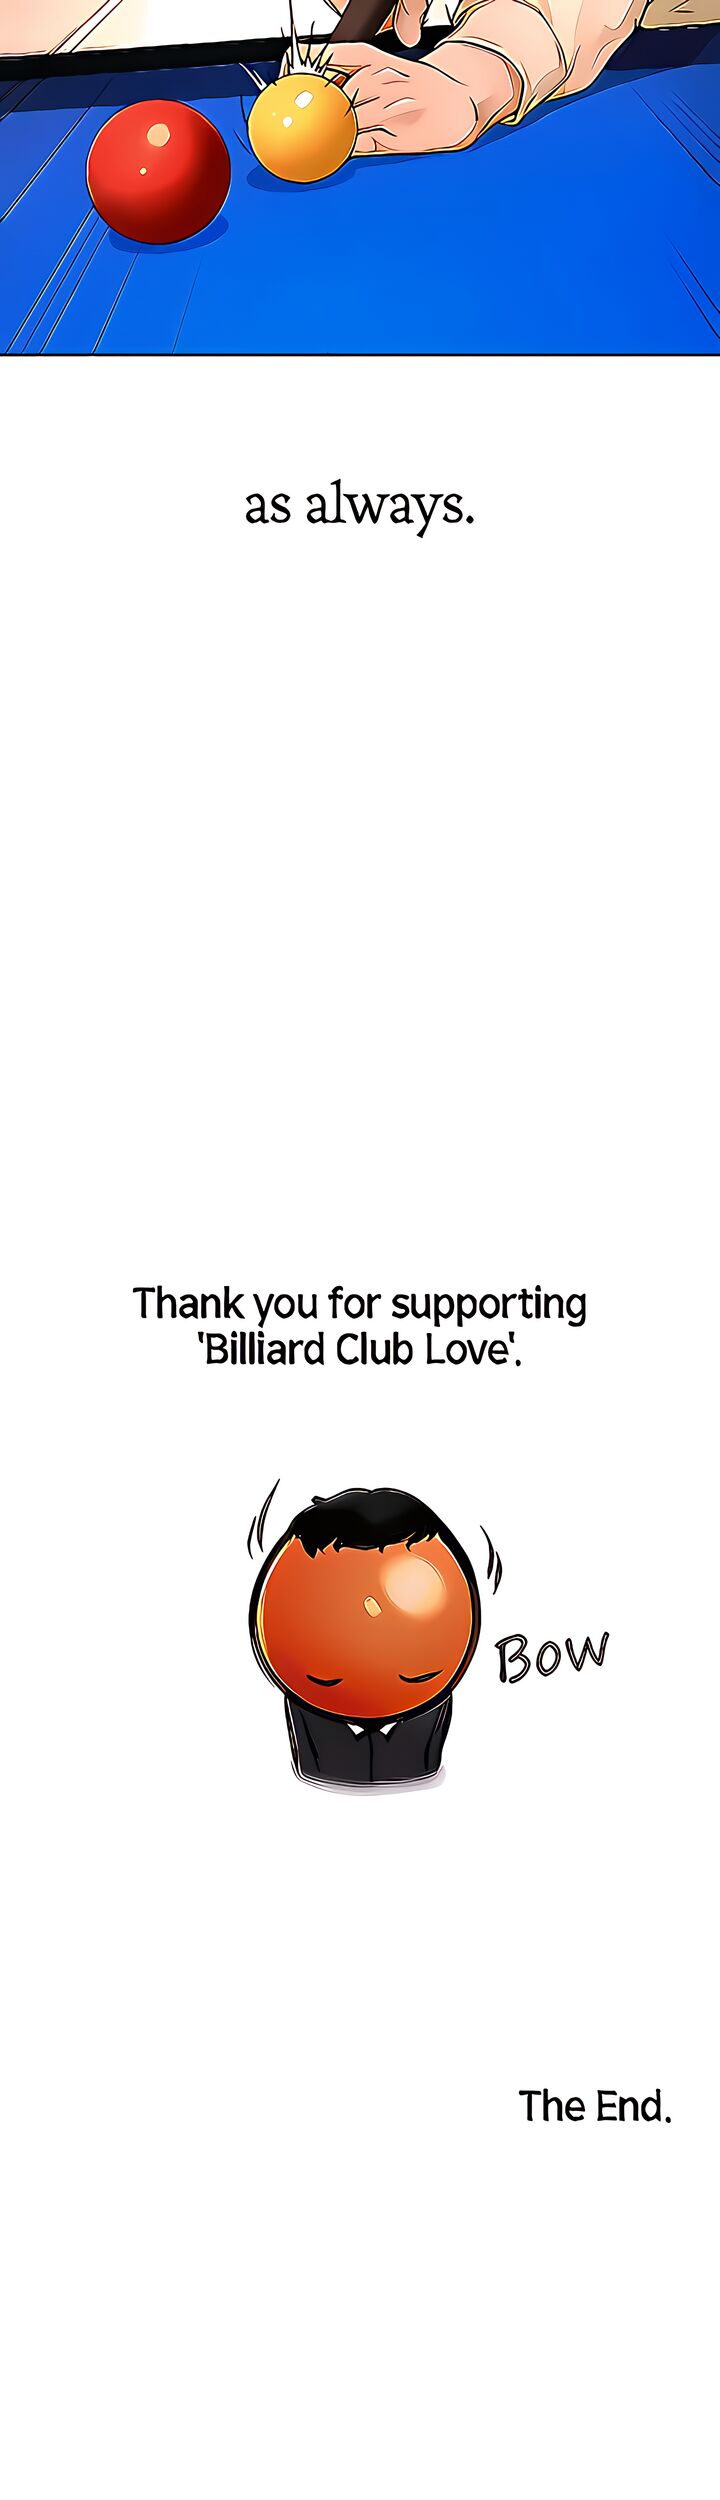 Billiard Club Love image